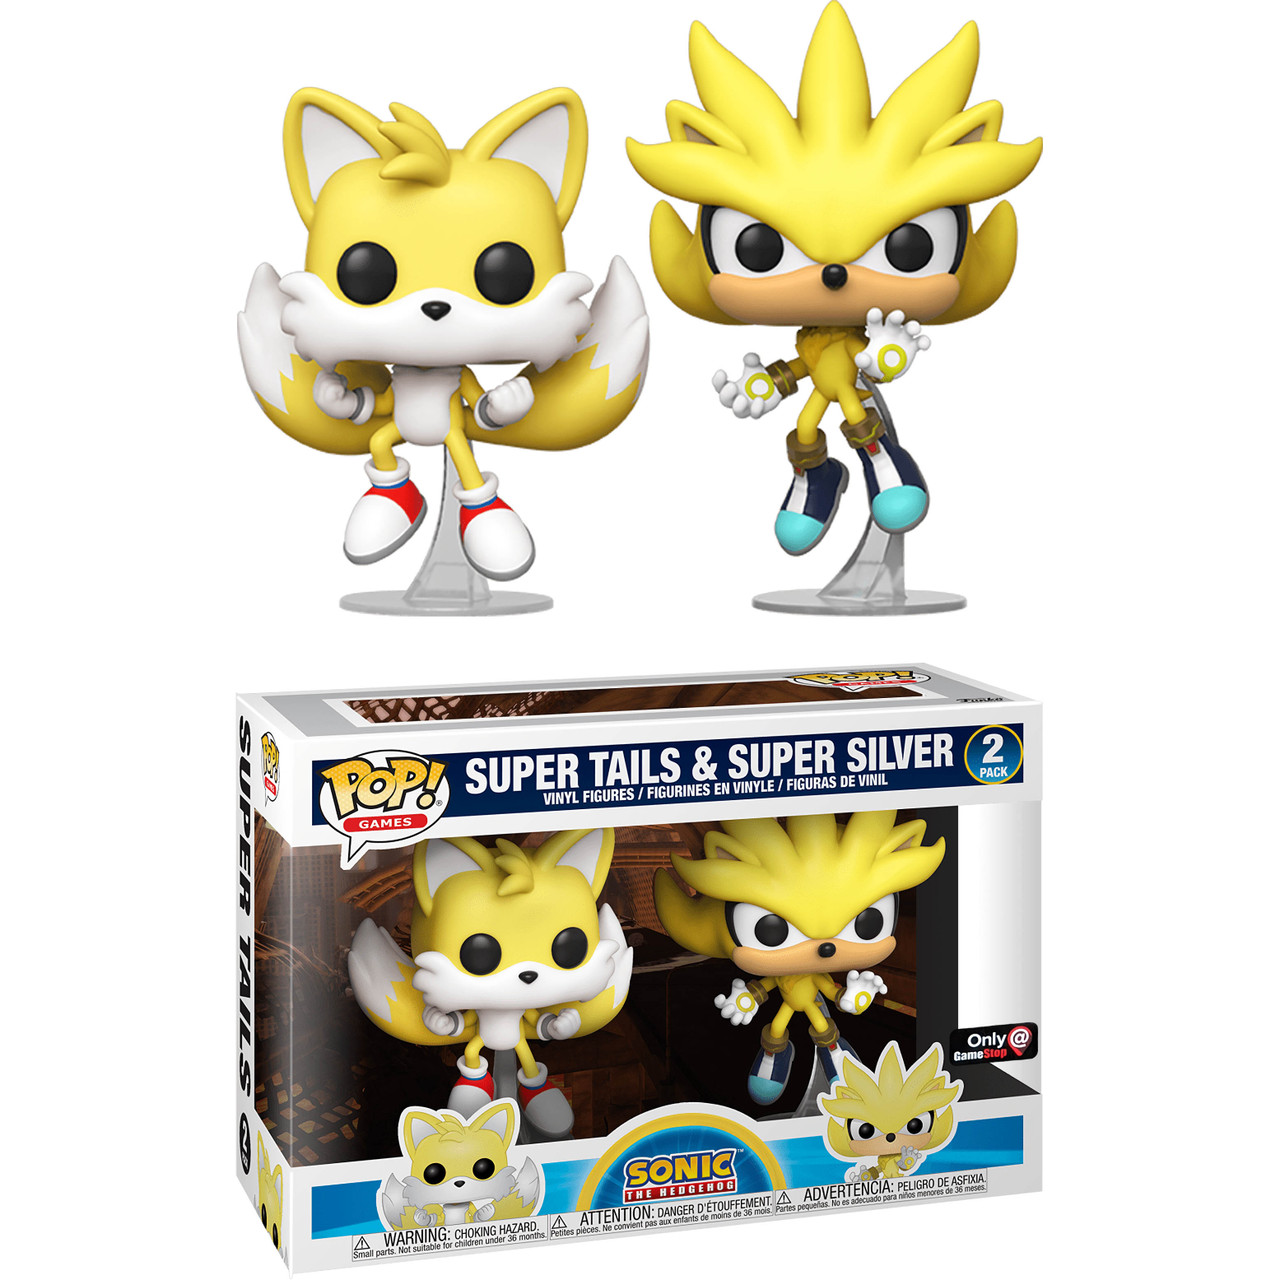 New Super Tails & Super Silver Funko Figures Announced – SoaH City